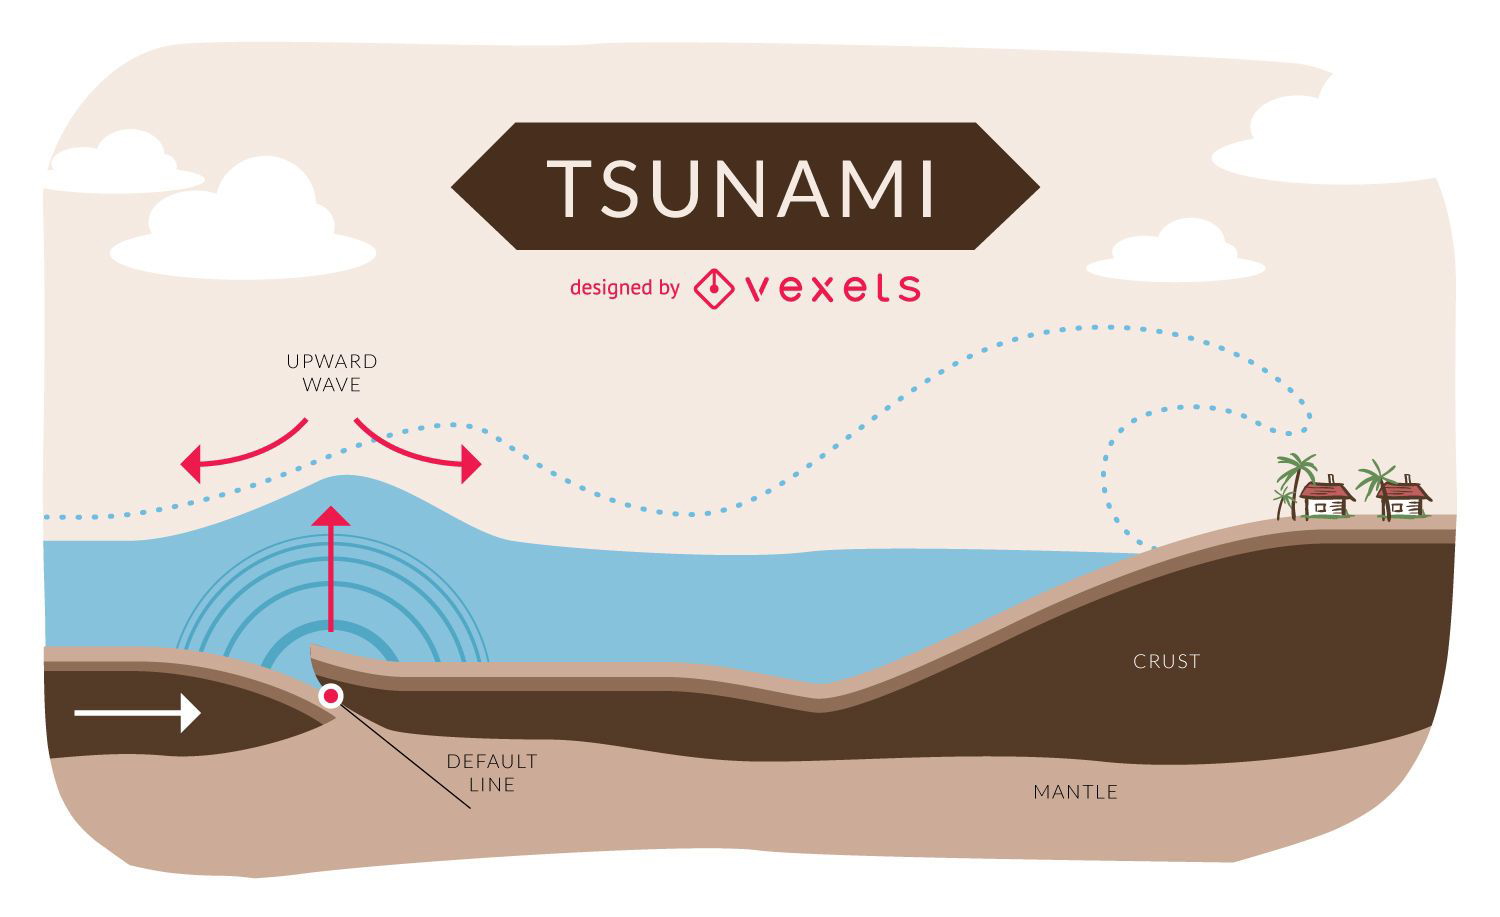 infograf?a tsunami